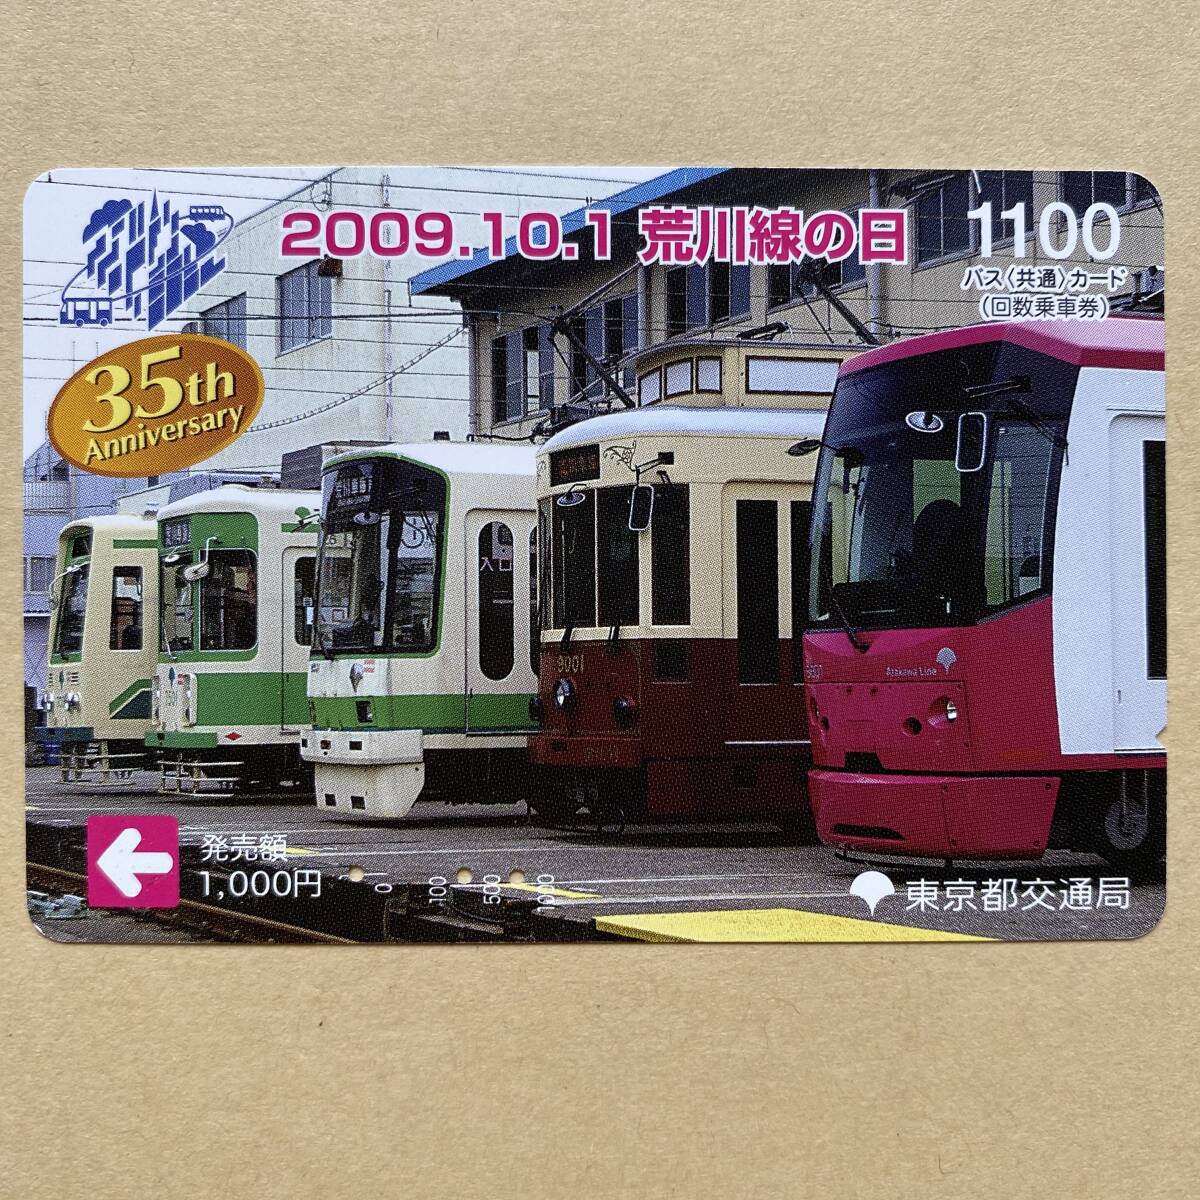 [ used ] bus card Tokyo Metropolitan area traffic department 2009.10.1. river line. day 35 anniversary commemoration tram 